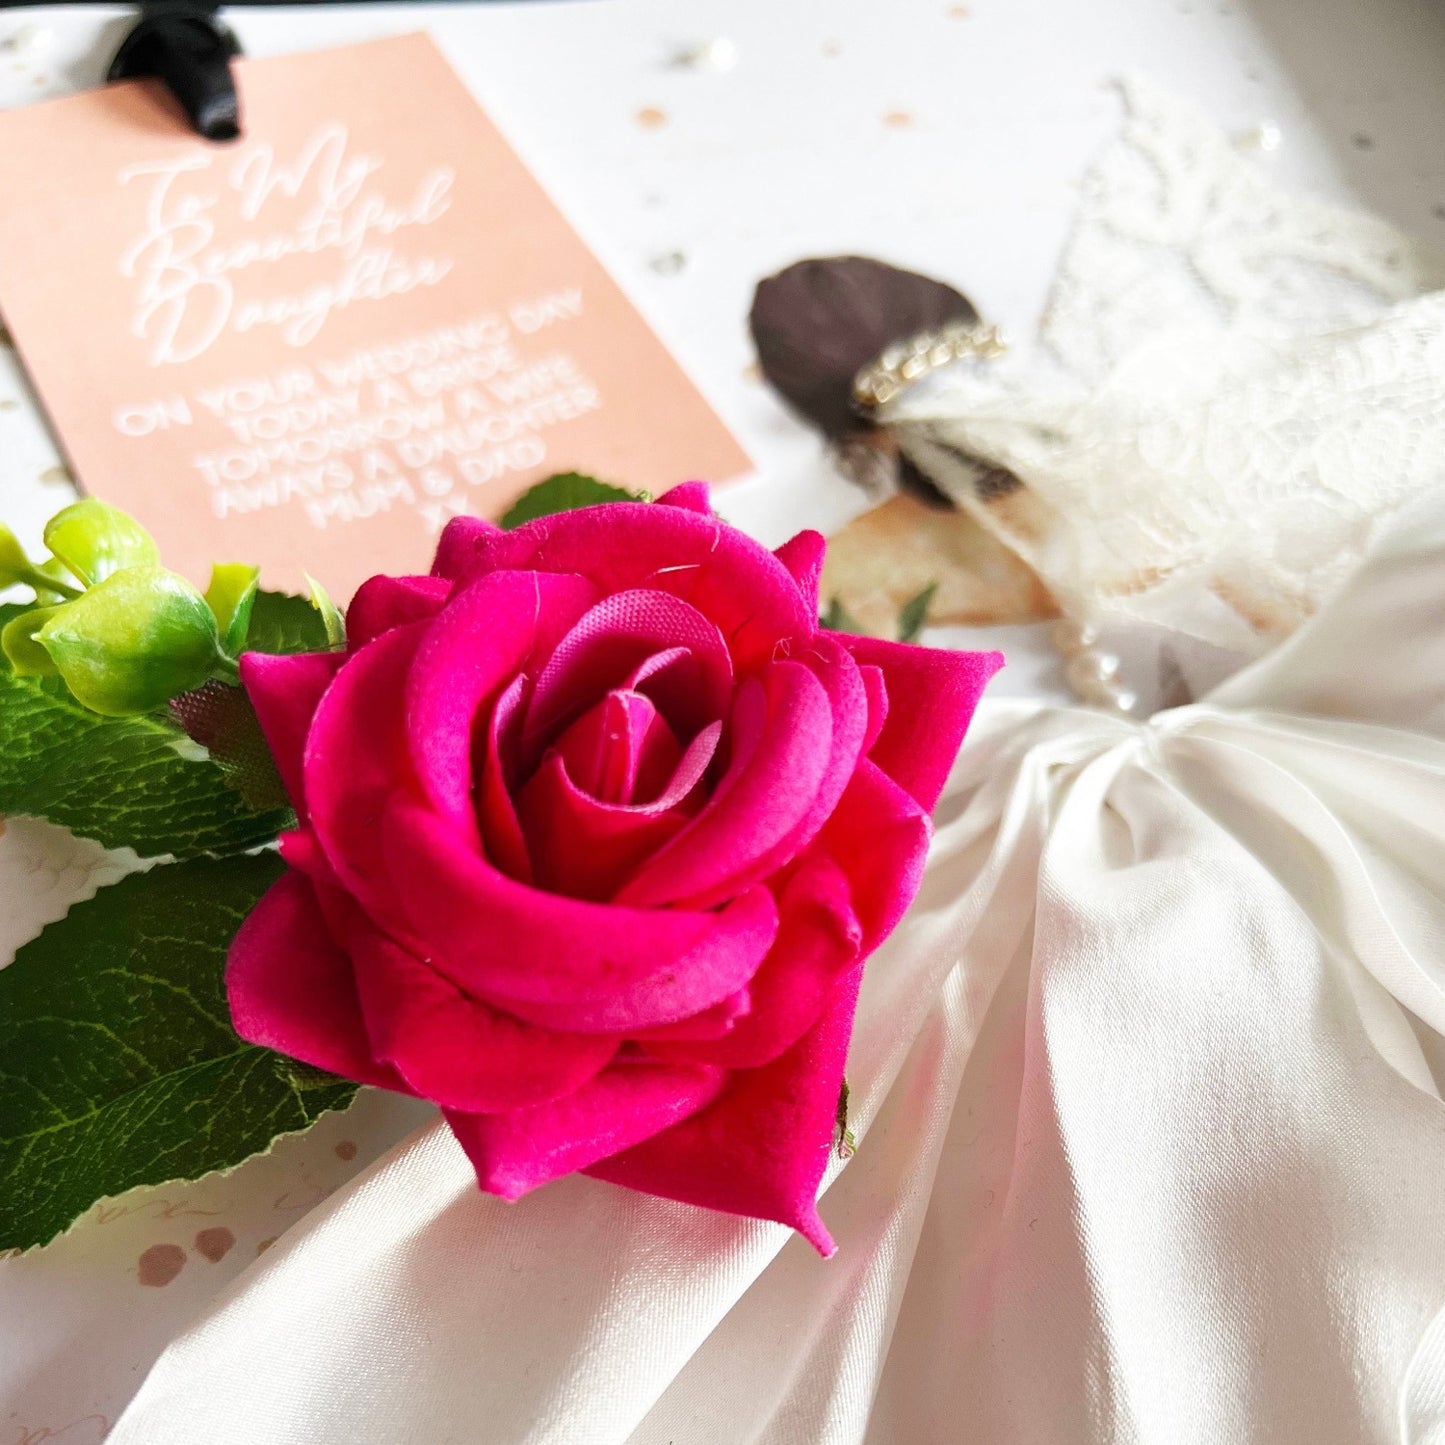 Hot pink rose wedding card for my Granddaughter | Luxury keepsake wedding cards personalised with wording